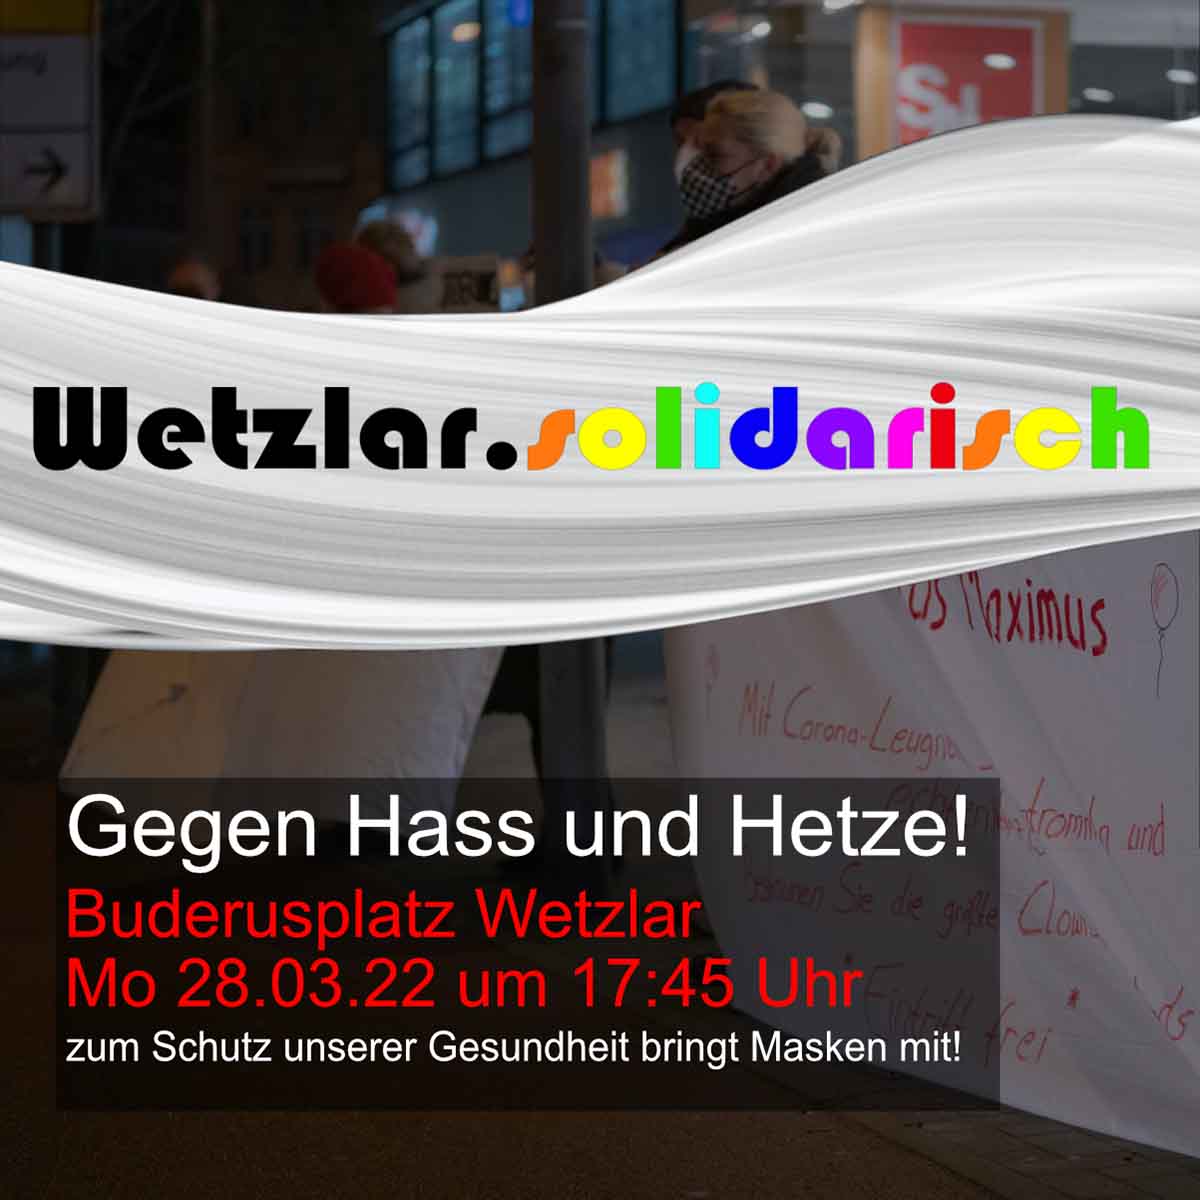 Wetzlar solidarisch am 28.03.2022